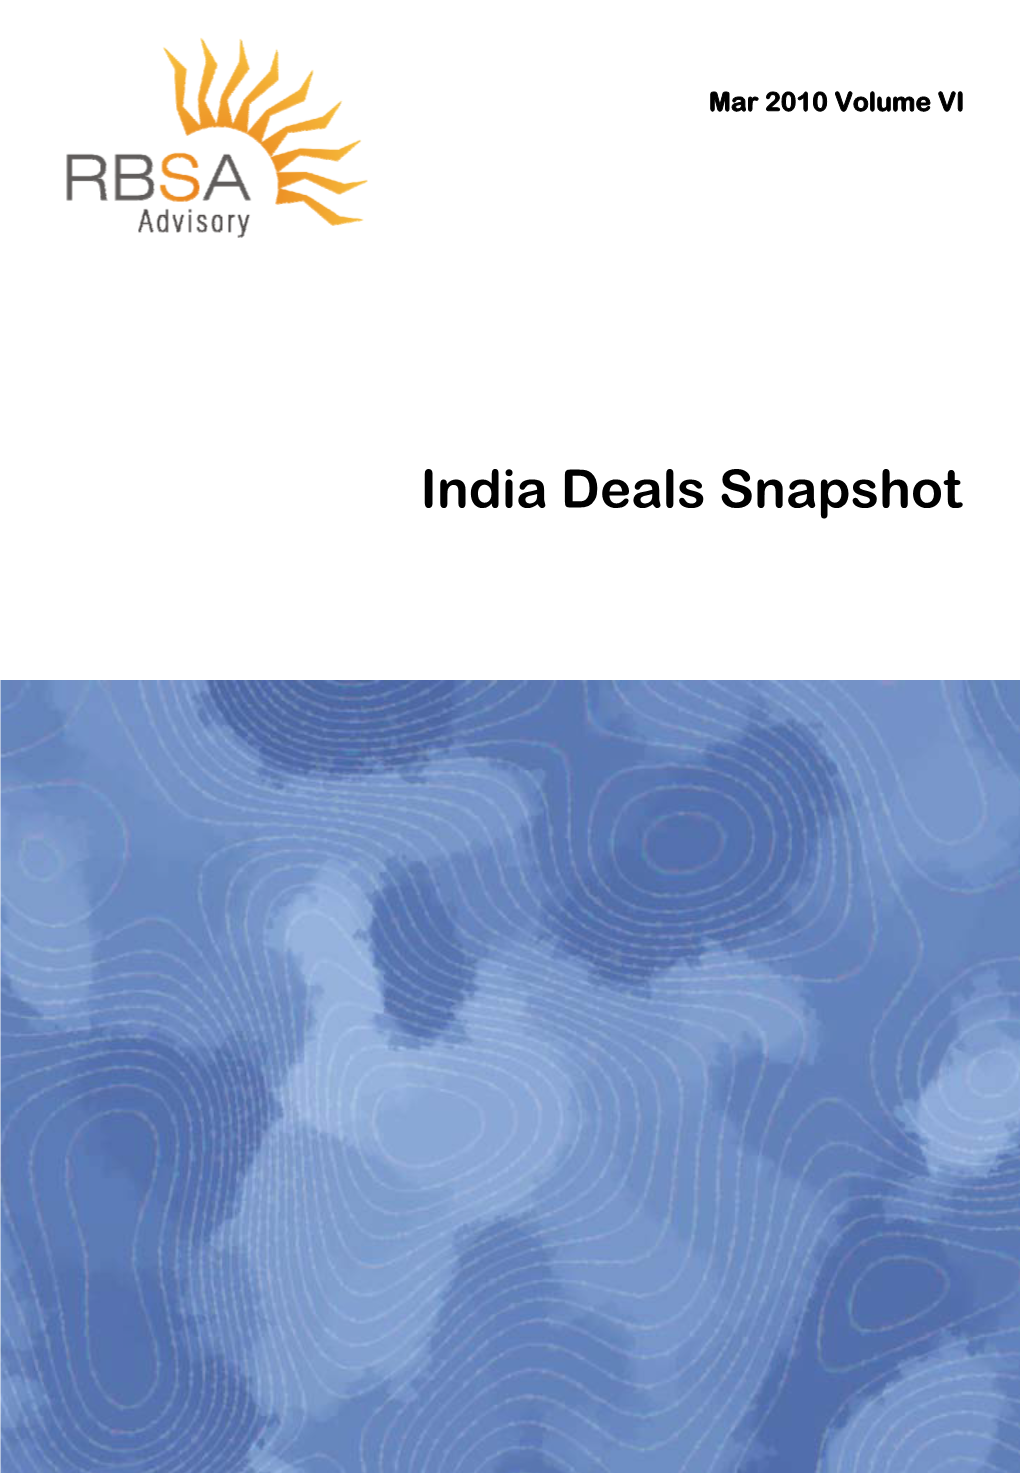 RBSA India Deals Snapshot March 2010-2